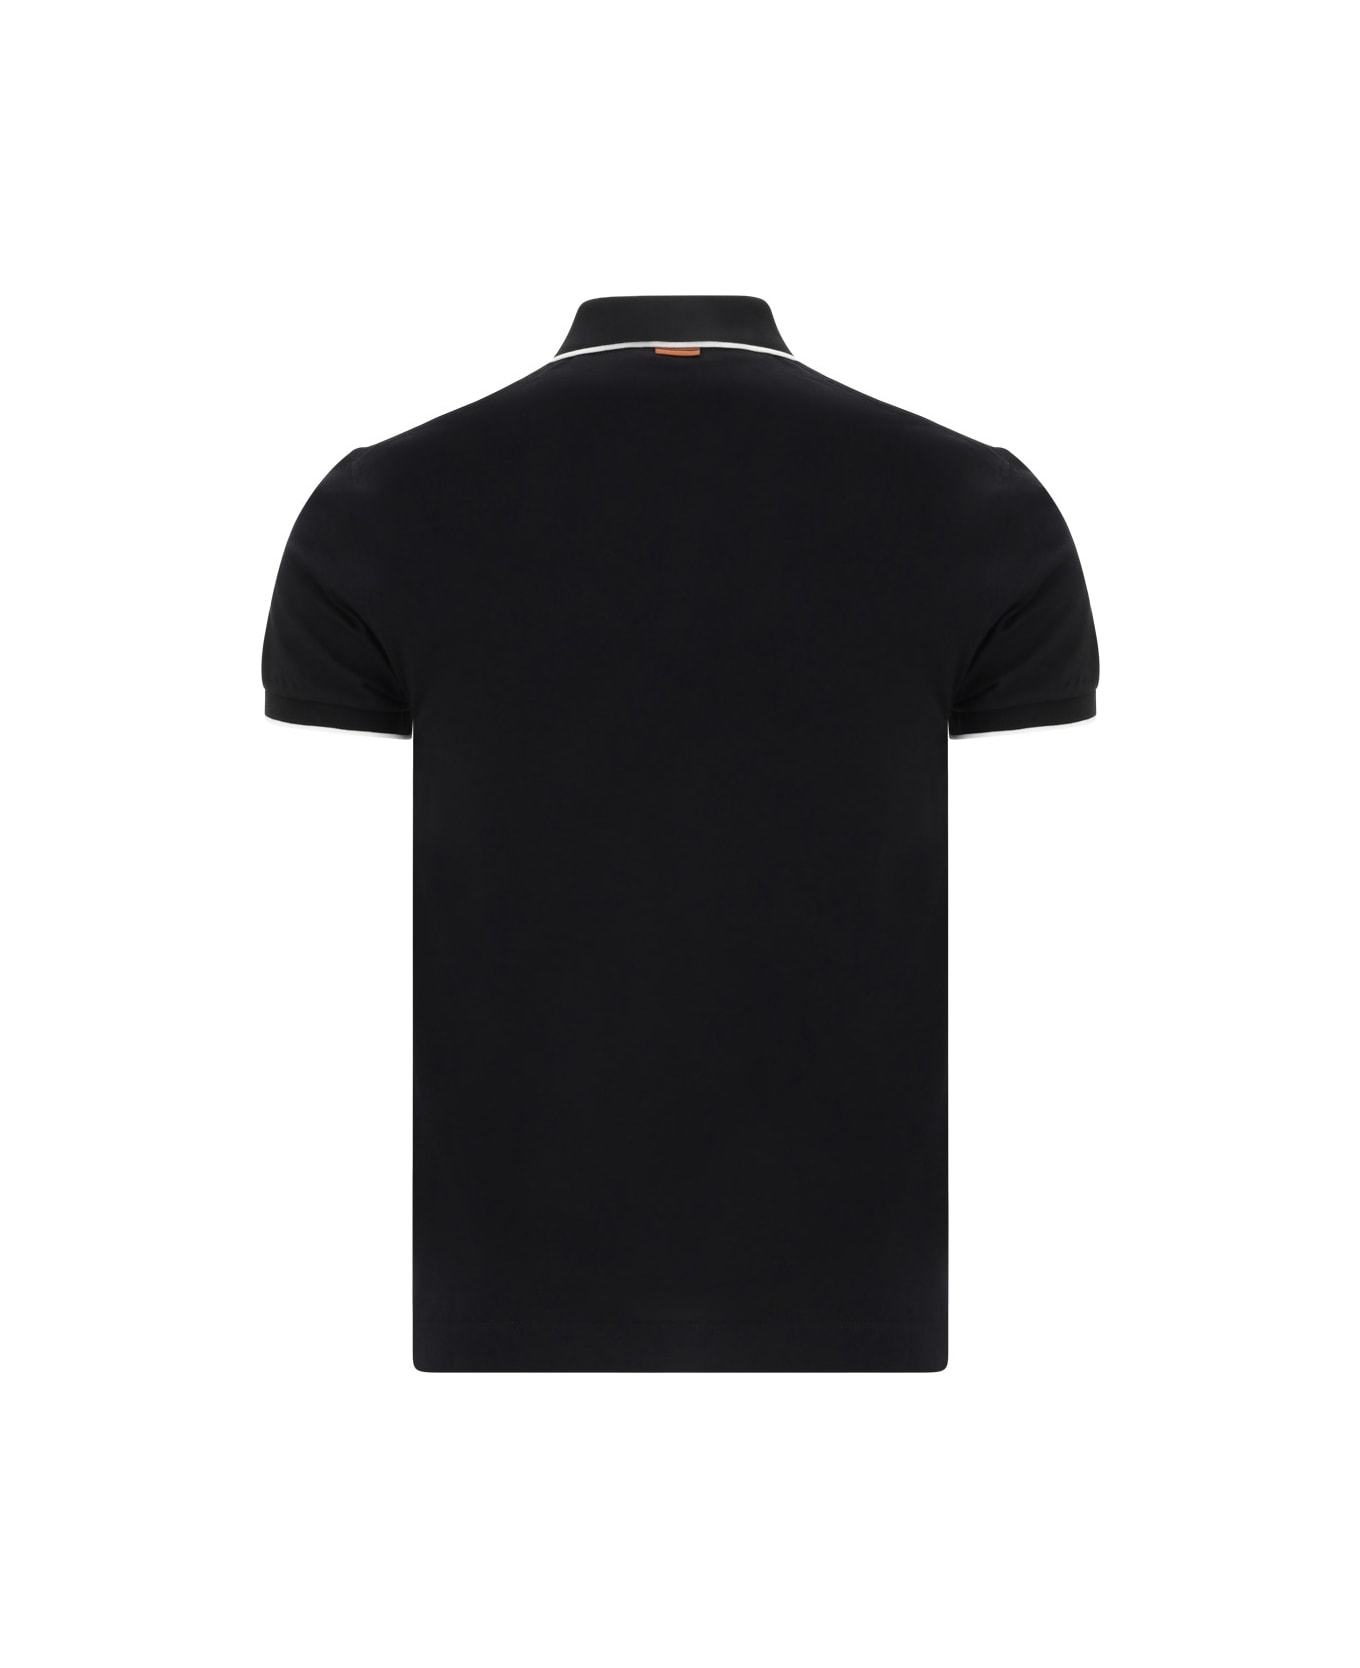 Zegna Polo Shirt Zegna - BLACK